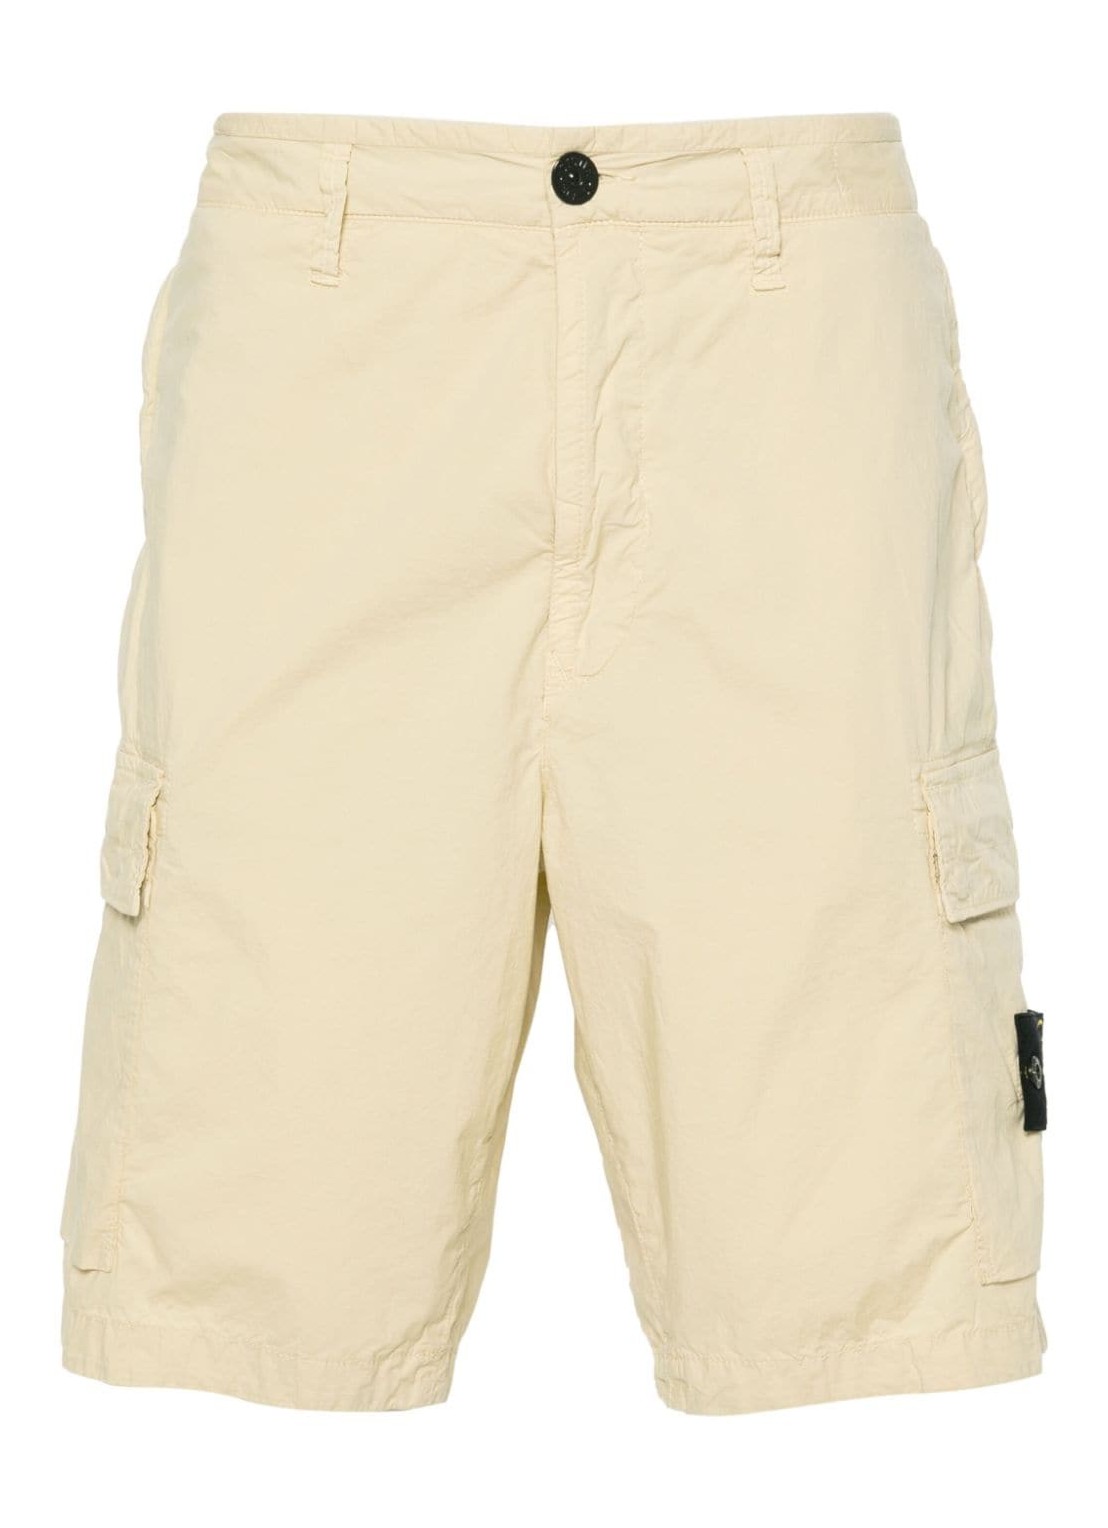 Pantalon corto stone island short pant man bermuda shorts 8015l0803 v0091 talla 36
 